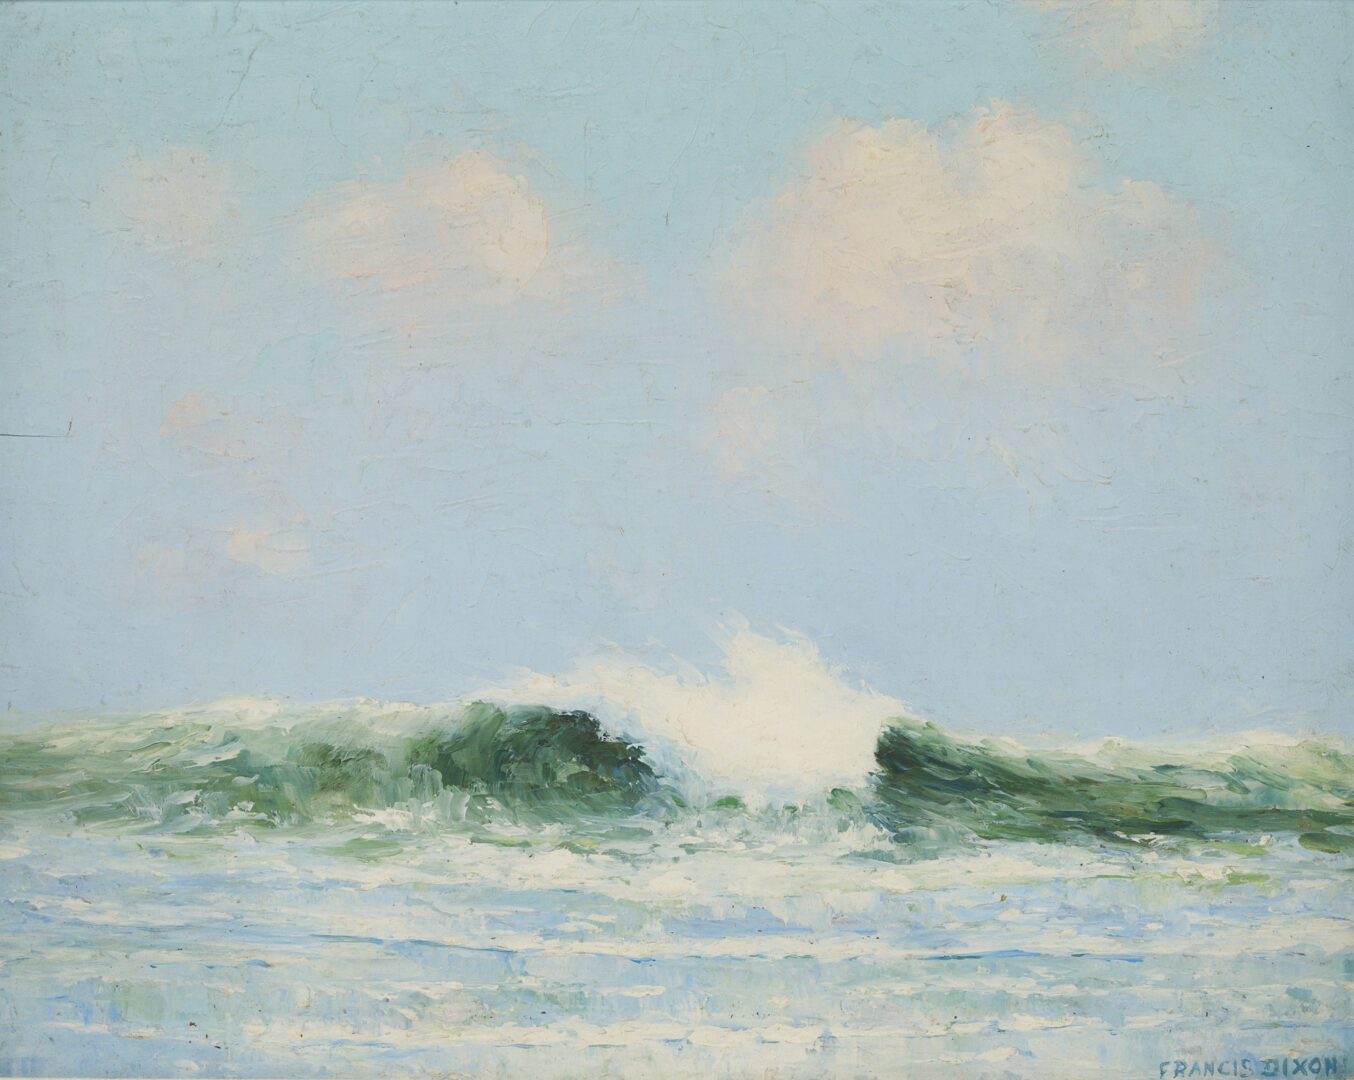 Lot 725: Francis Dixon, O/B Coastal Landscape, "Morning Surf"